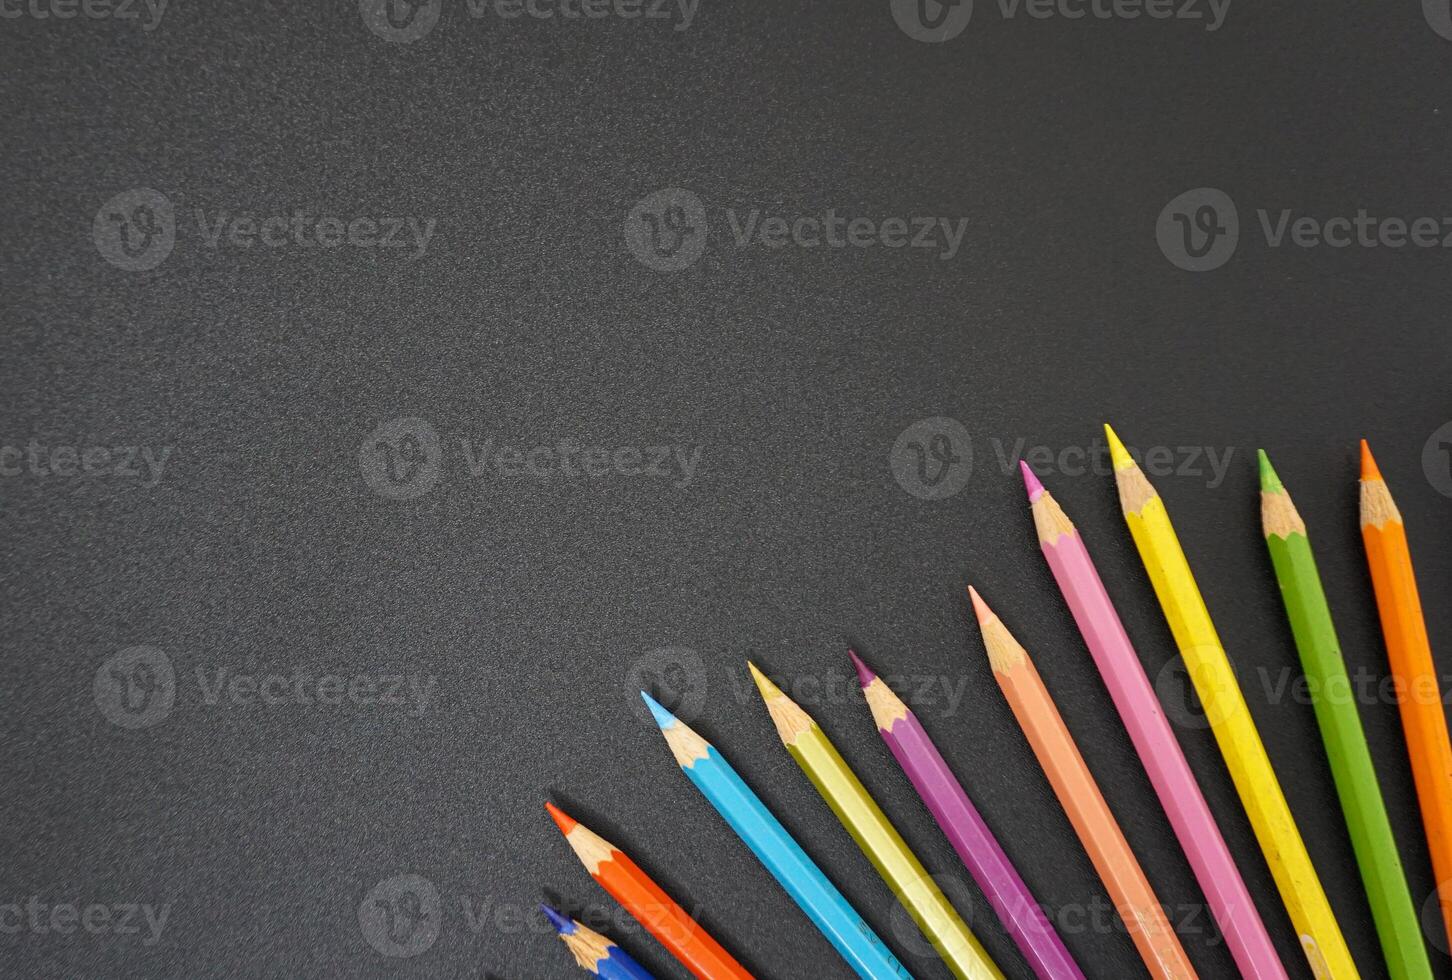 gekleurde potlood Aan zwart achtergrond foto